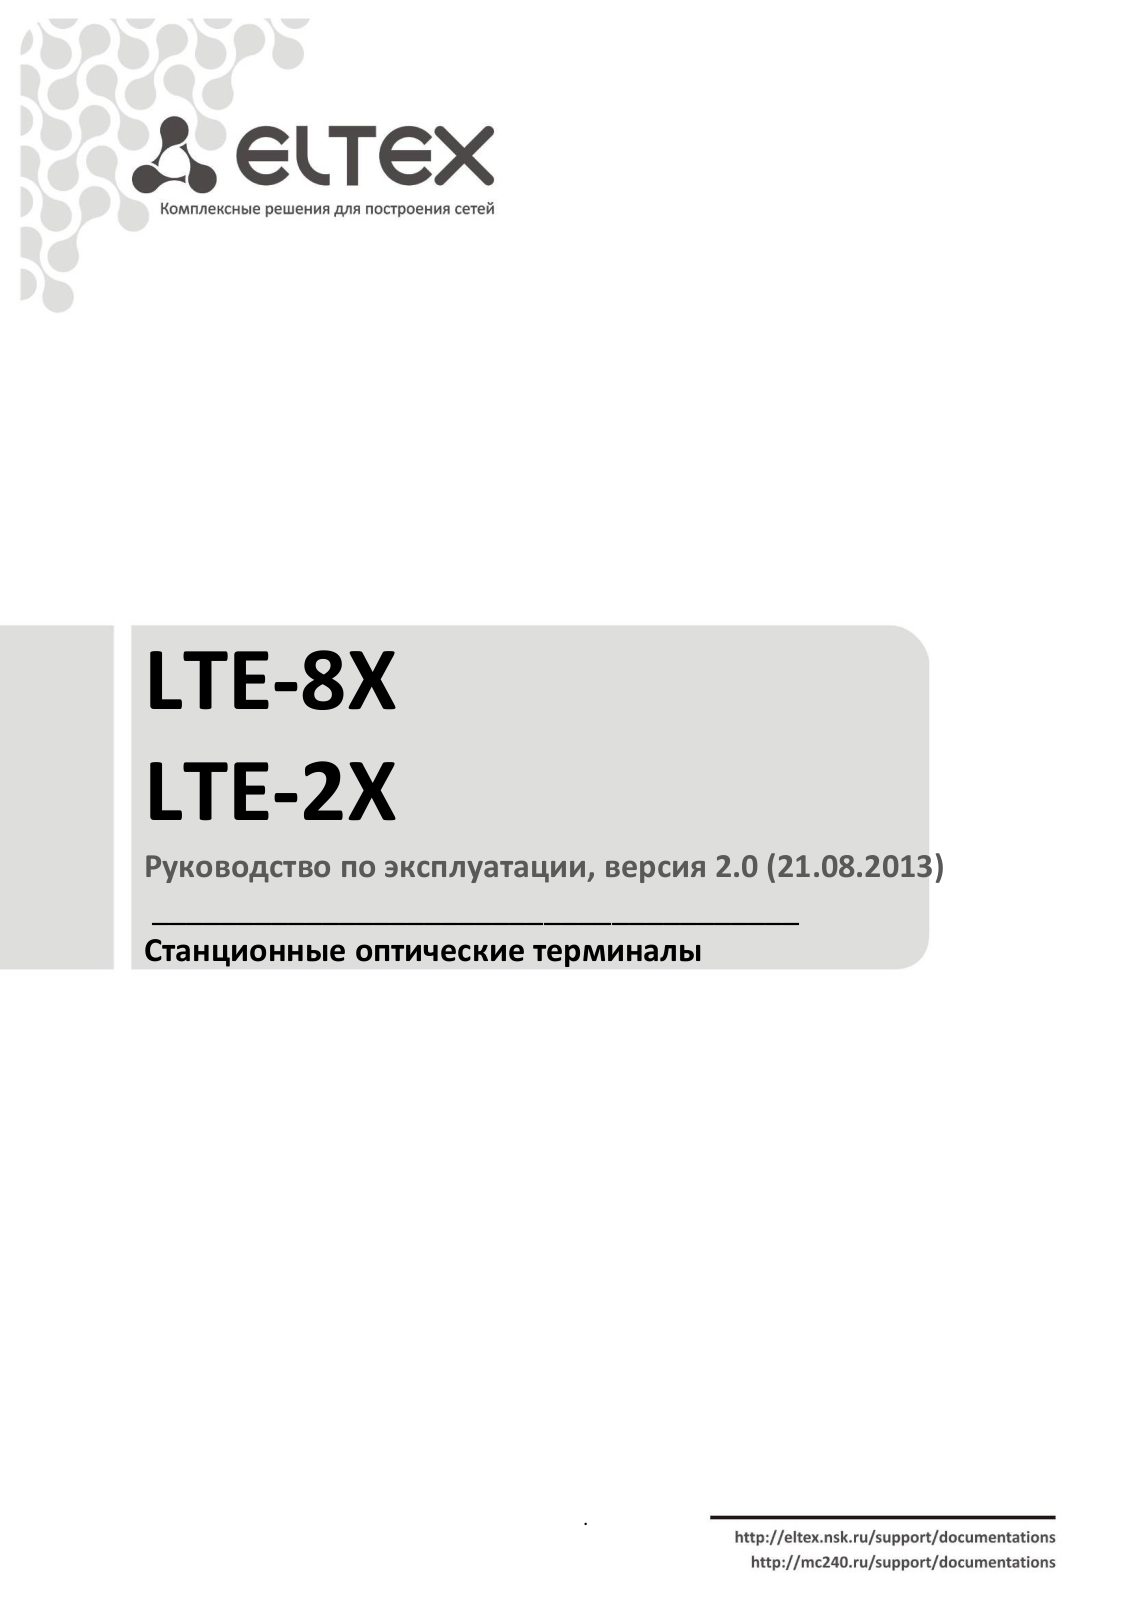 Eltex LTE-8X, LTE-2X User Manual